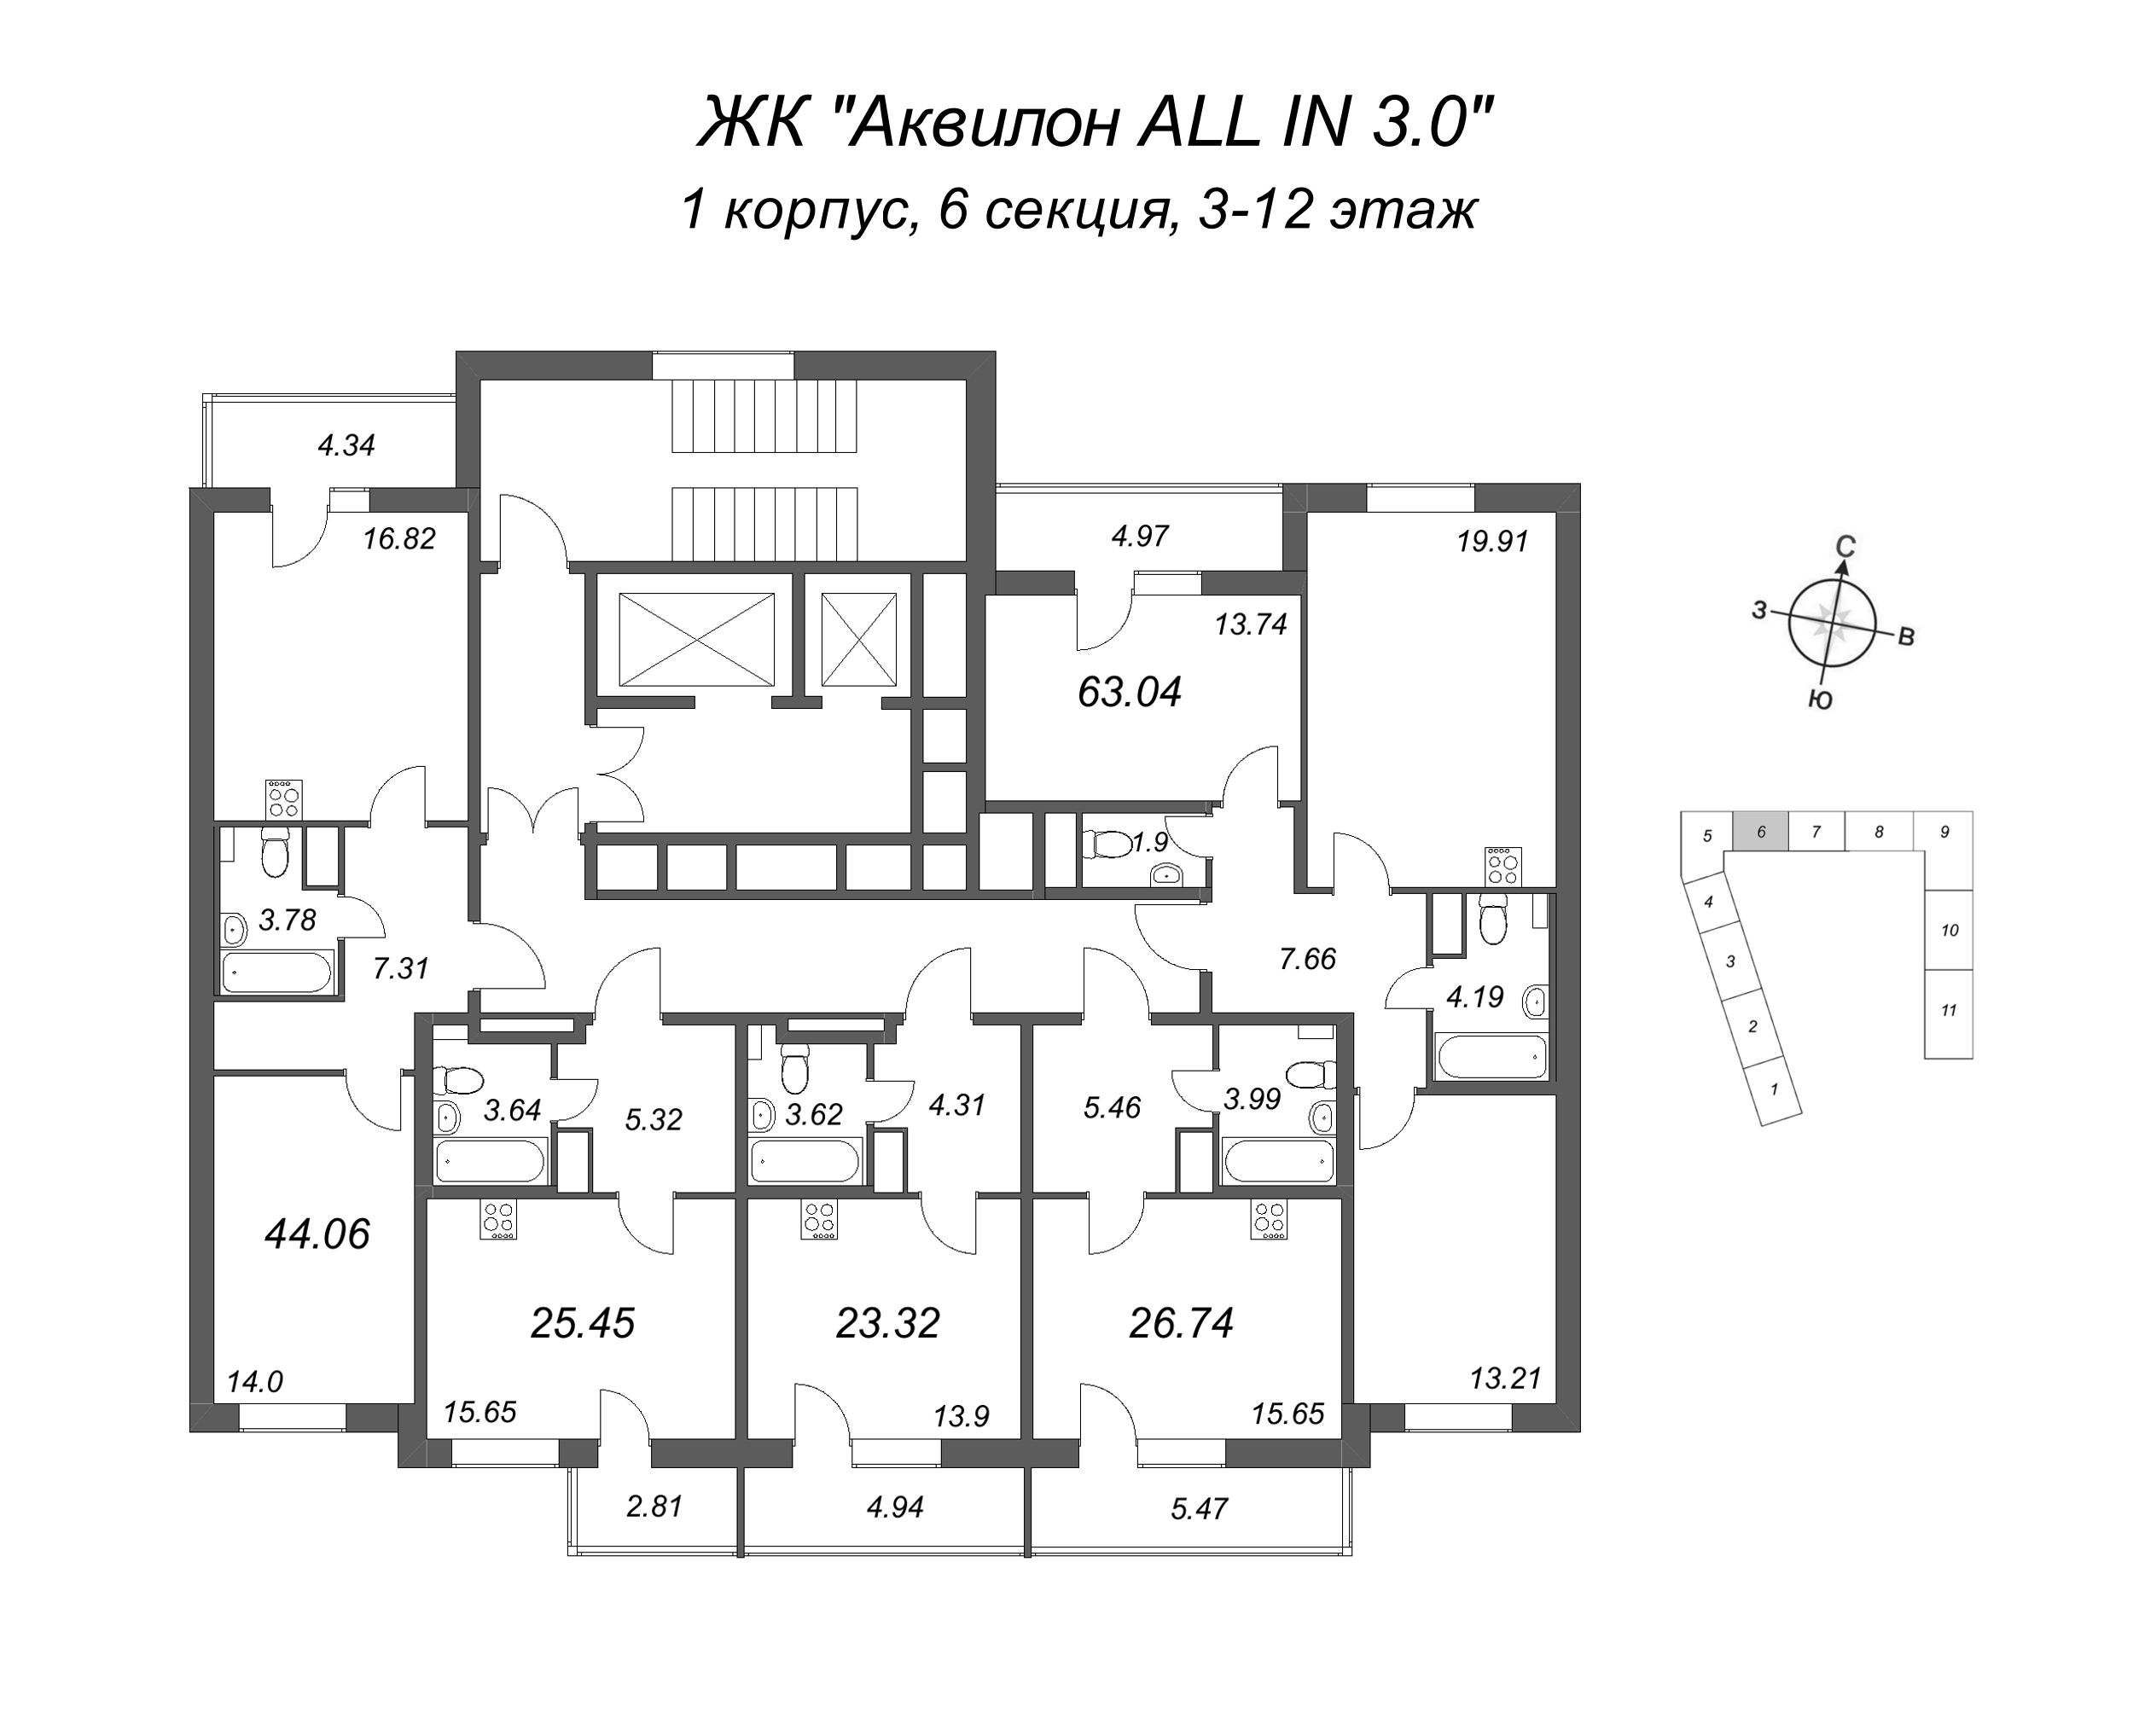 2-комнатная (Евро) квартира, 44.06 м² - планировка этажа